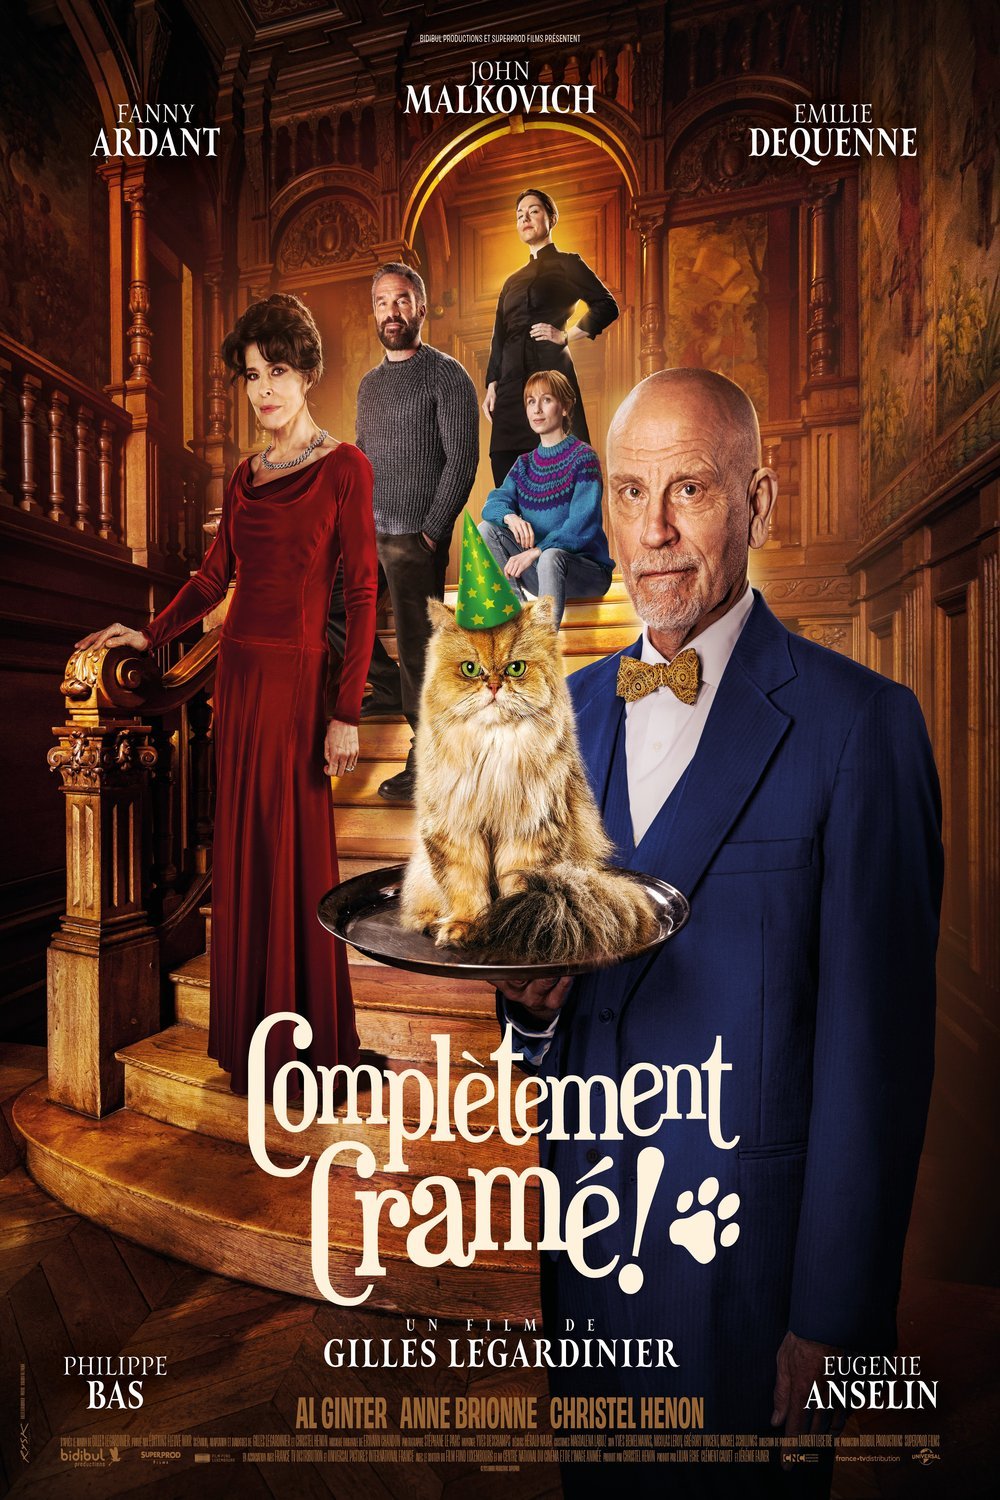 Poster of the movie Complètement cramé